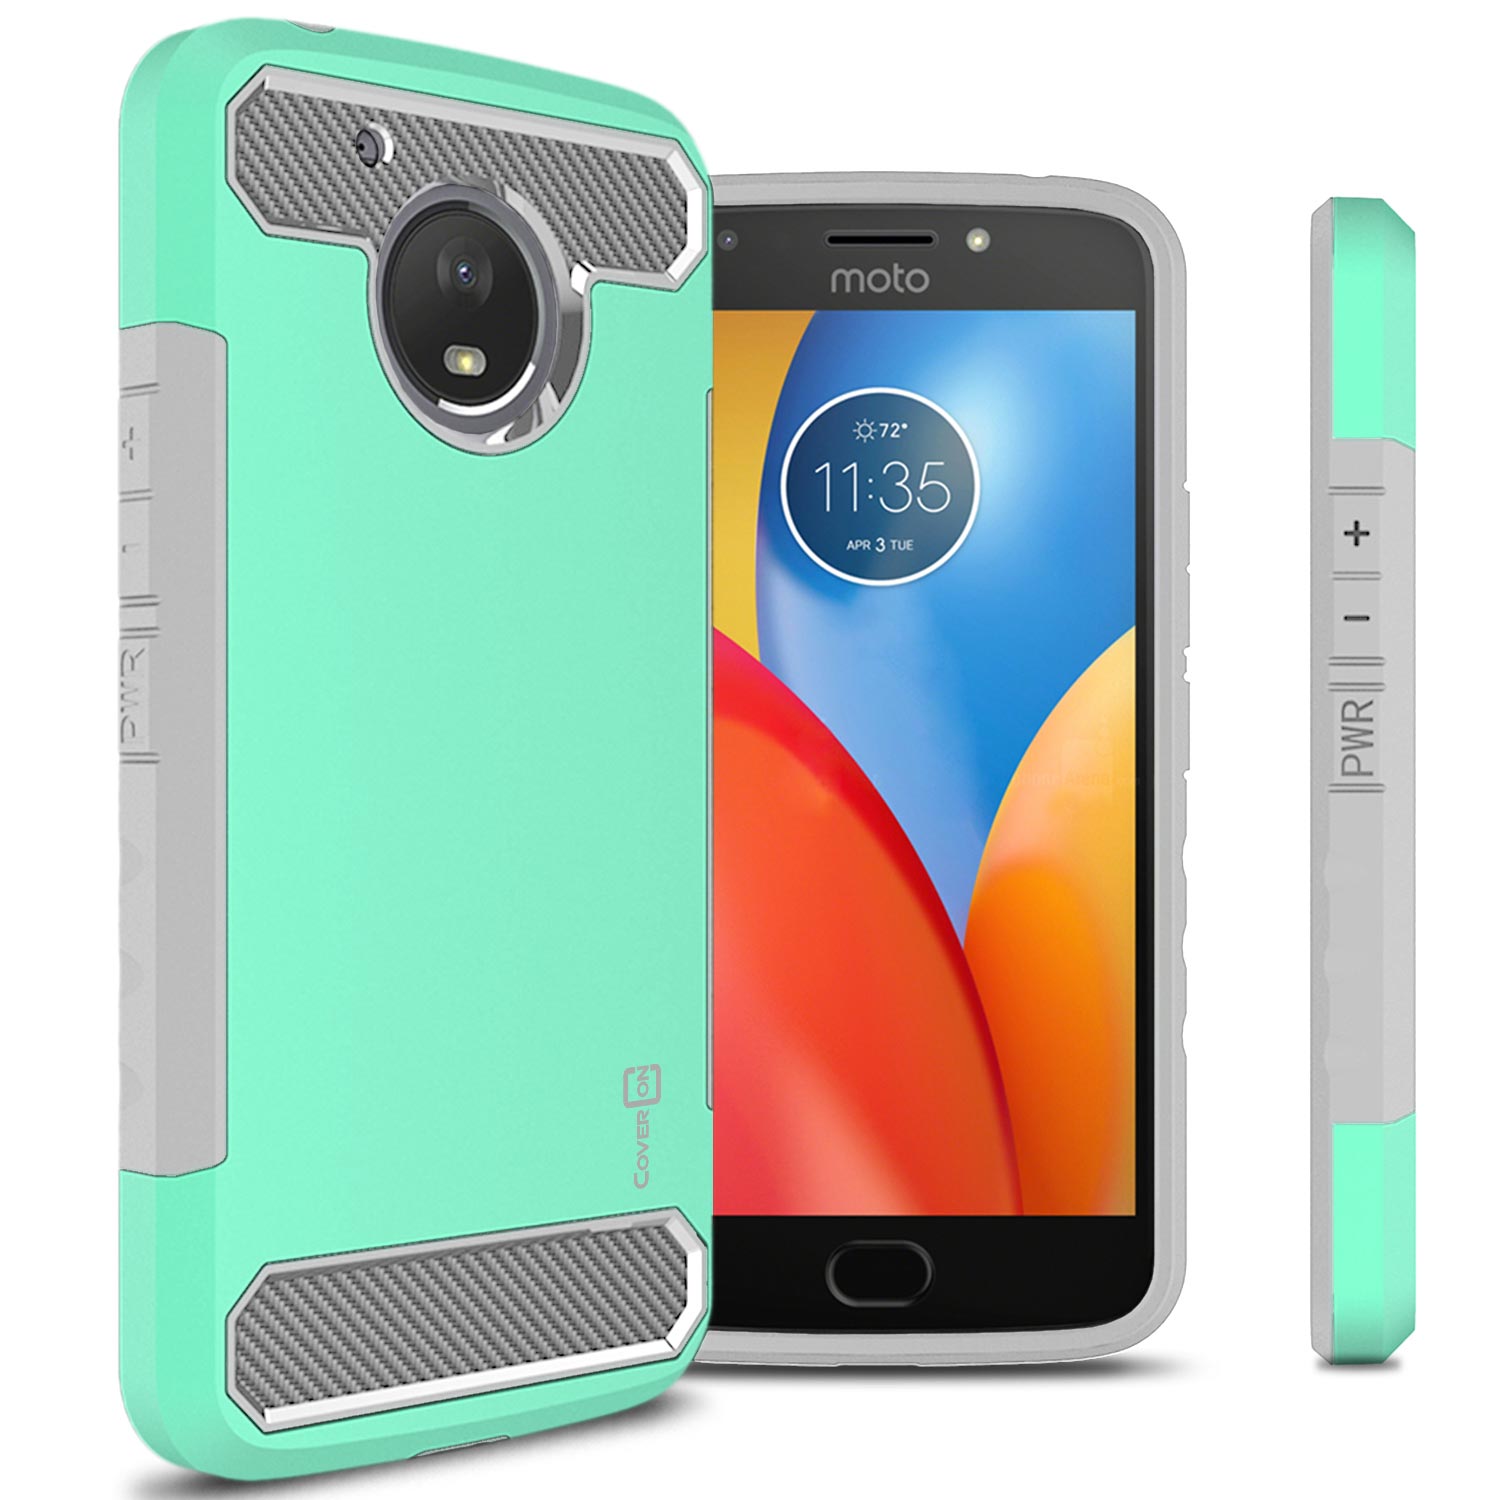 Teal / Gray Hard Slim Phone Case For Motorola Moto E4 Plus